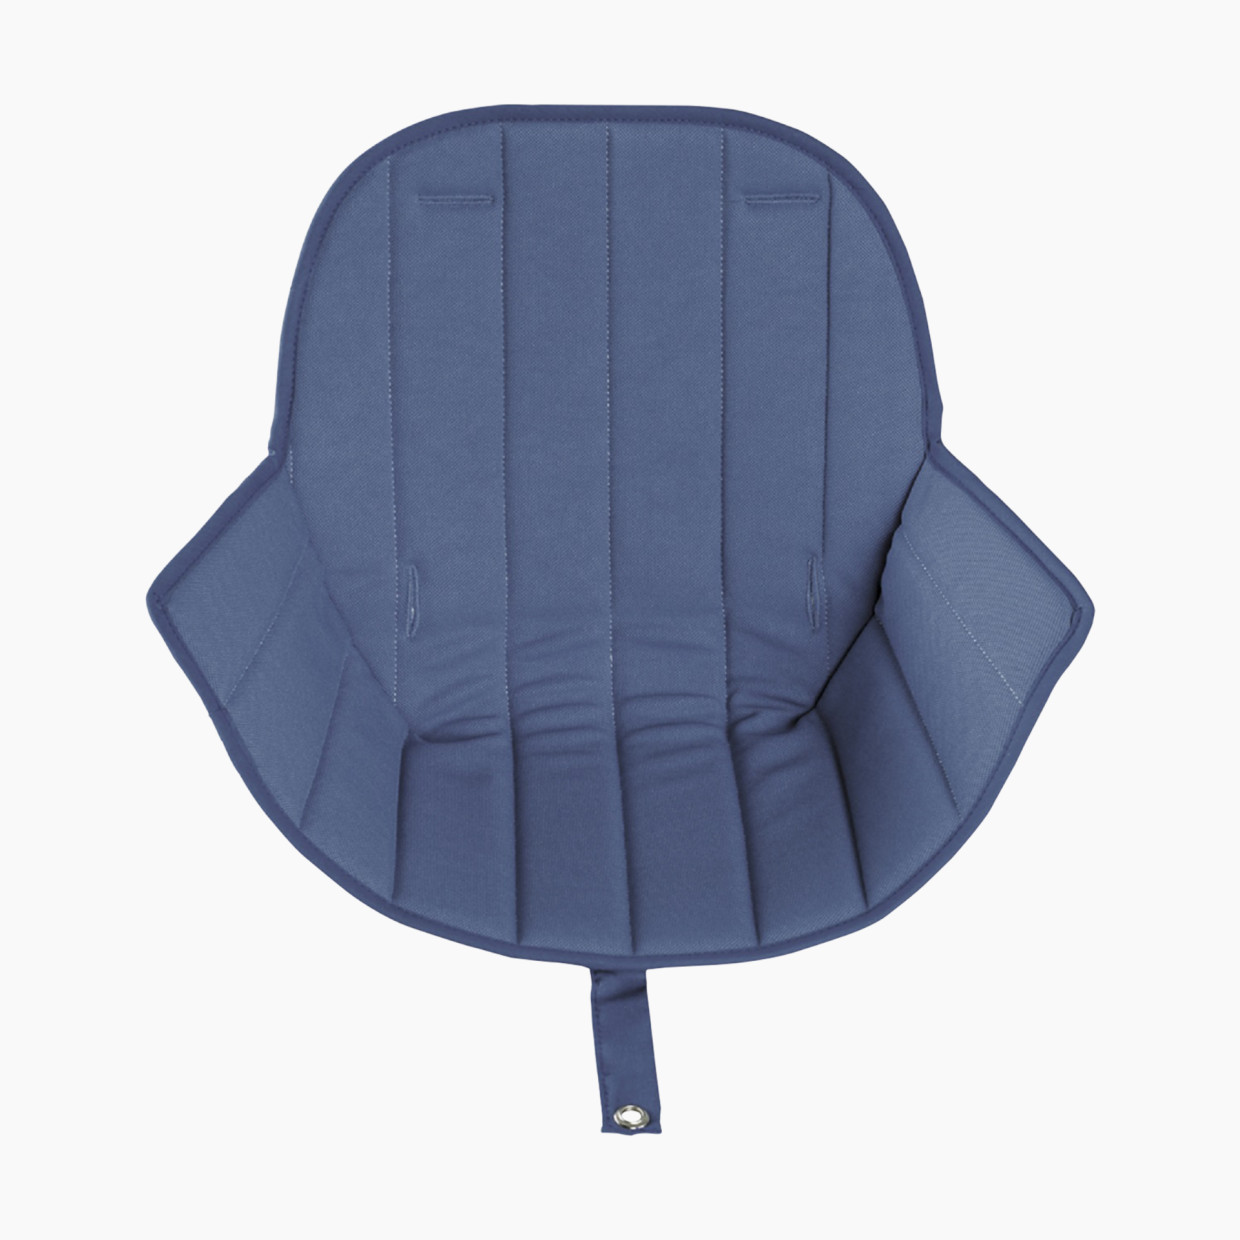 Micuna Ovo Fabric Seat Pad - Blue.